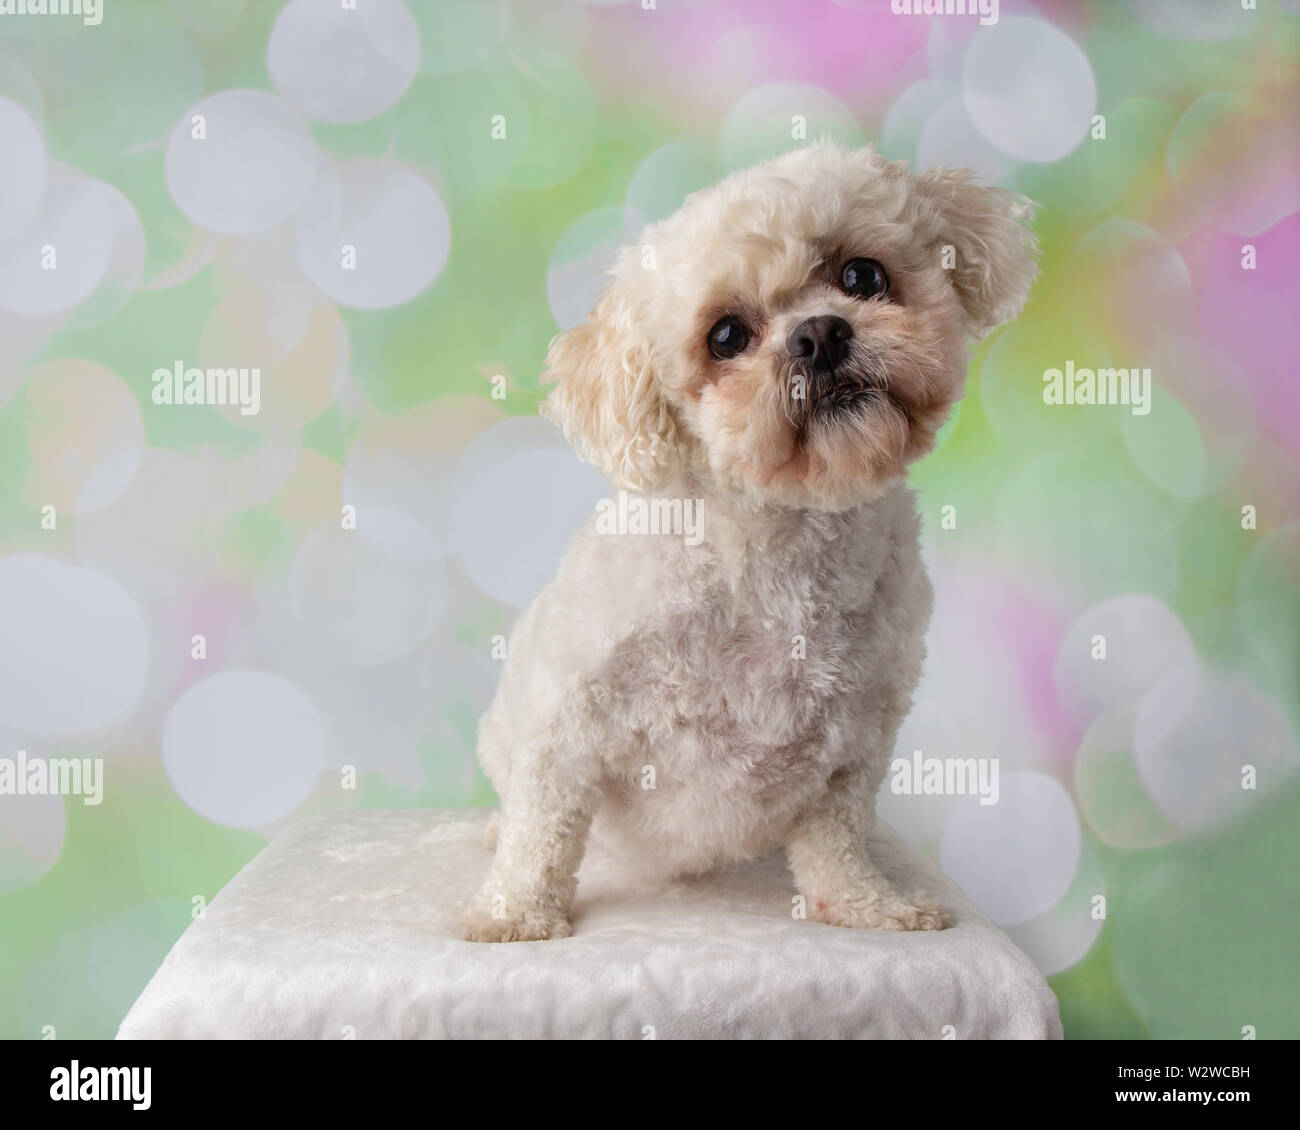 Bichon Frise Shih Tzu Mix Portrait on a Colorful Background Sitting Stock Photo